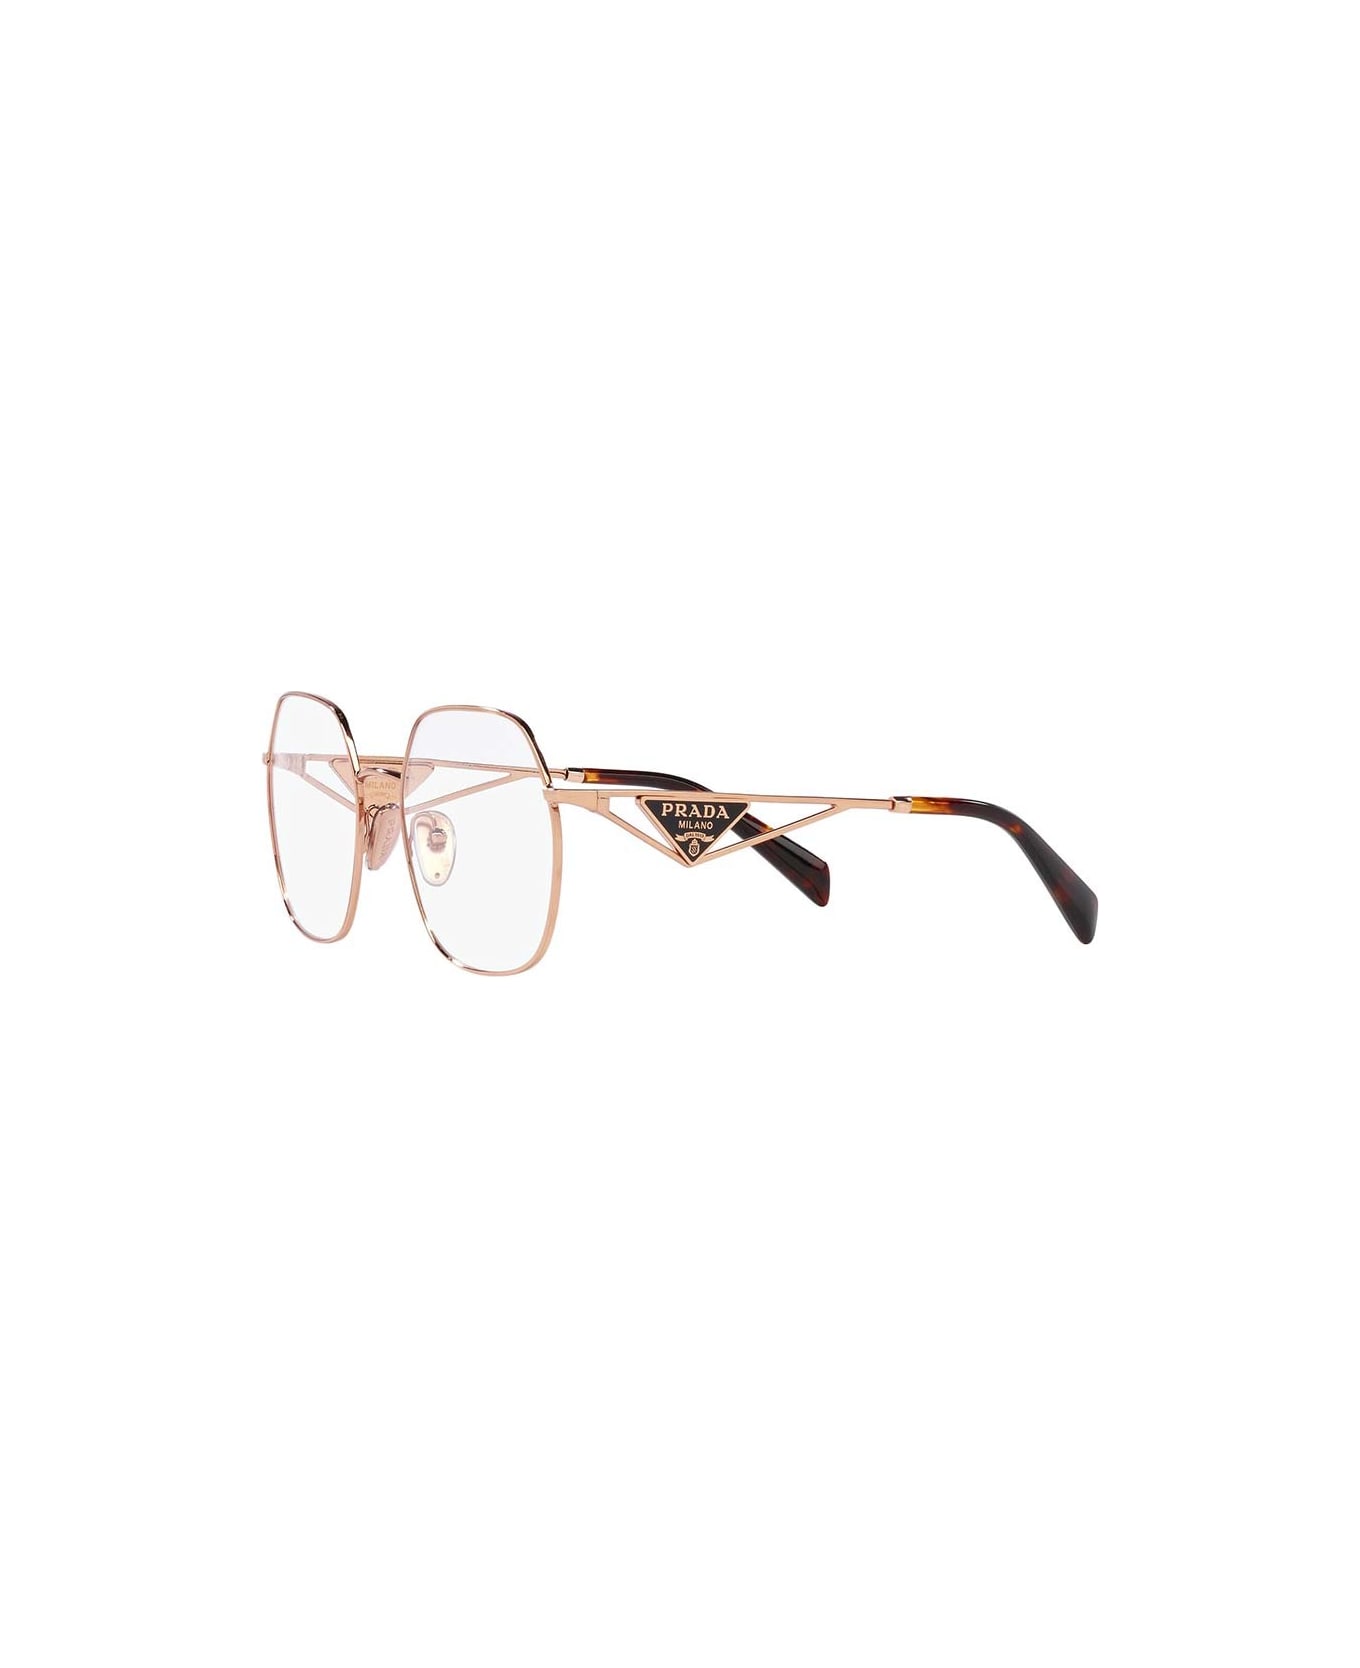 Prada Eyewear Glasses - SVF1O1